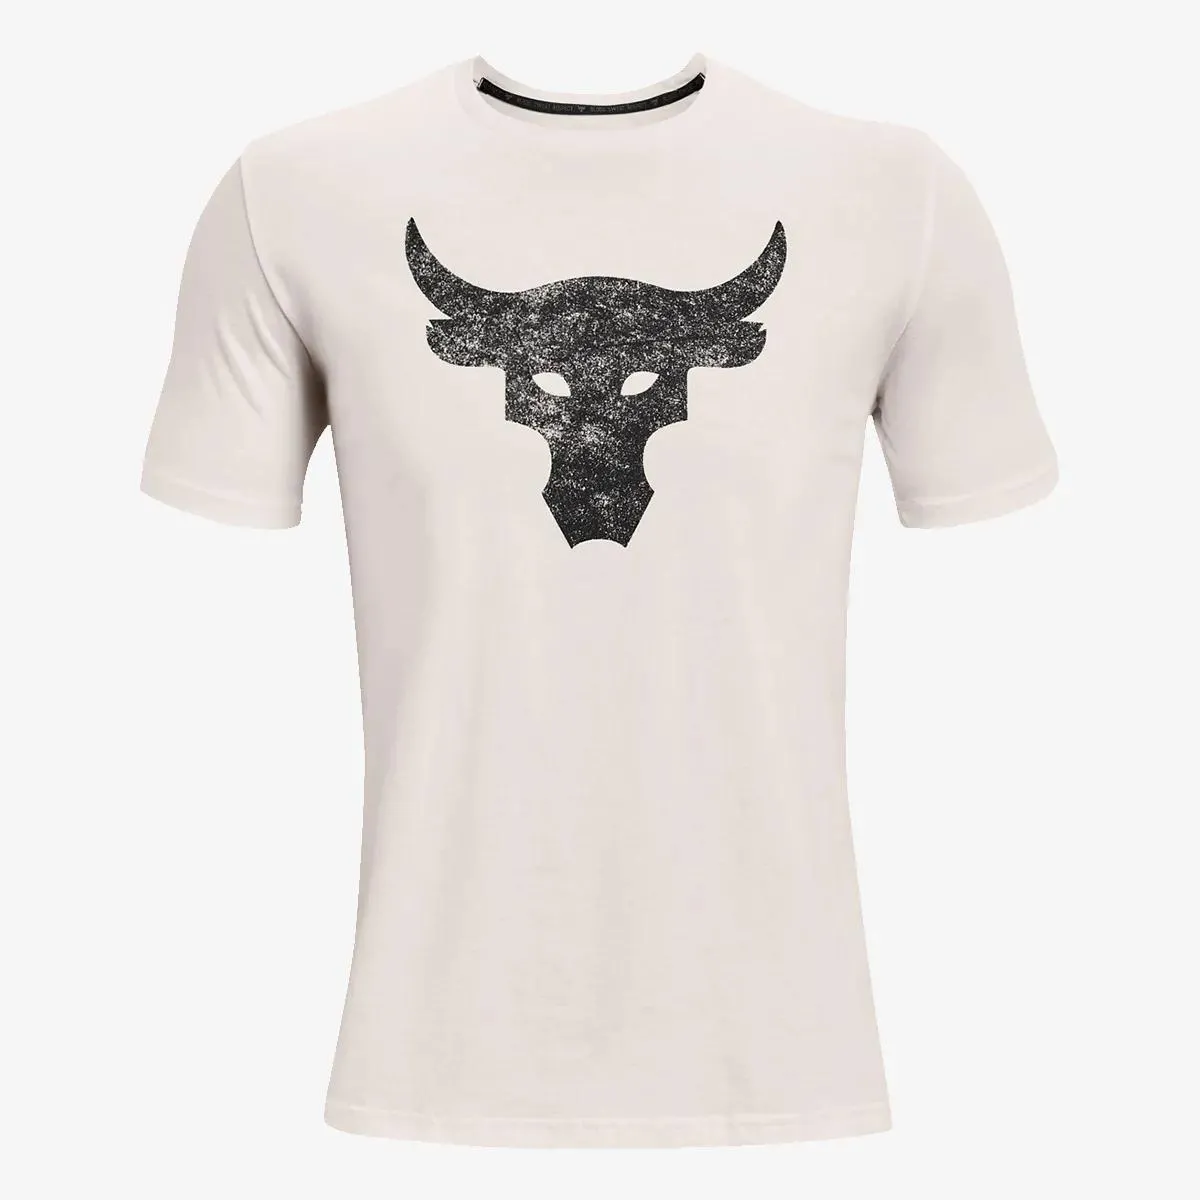 Under Armour T-shirt Project Rock Brahma Bull 